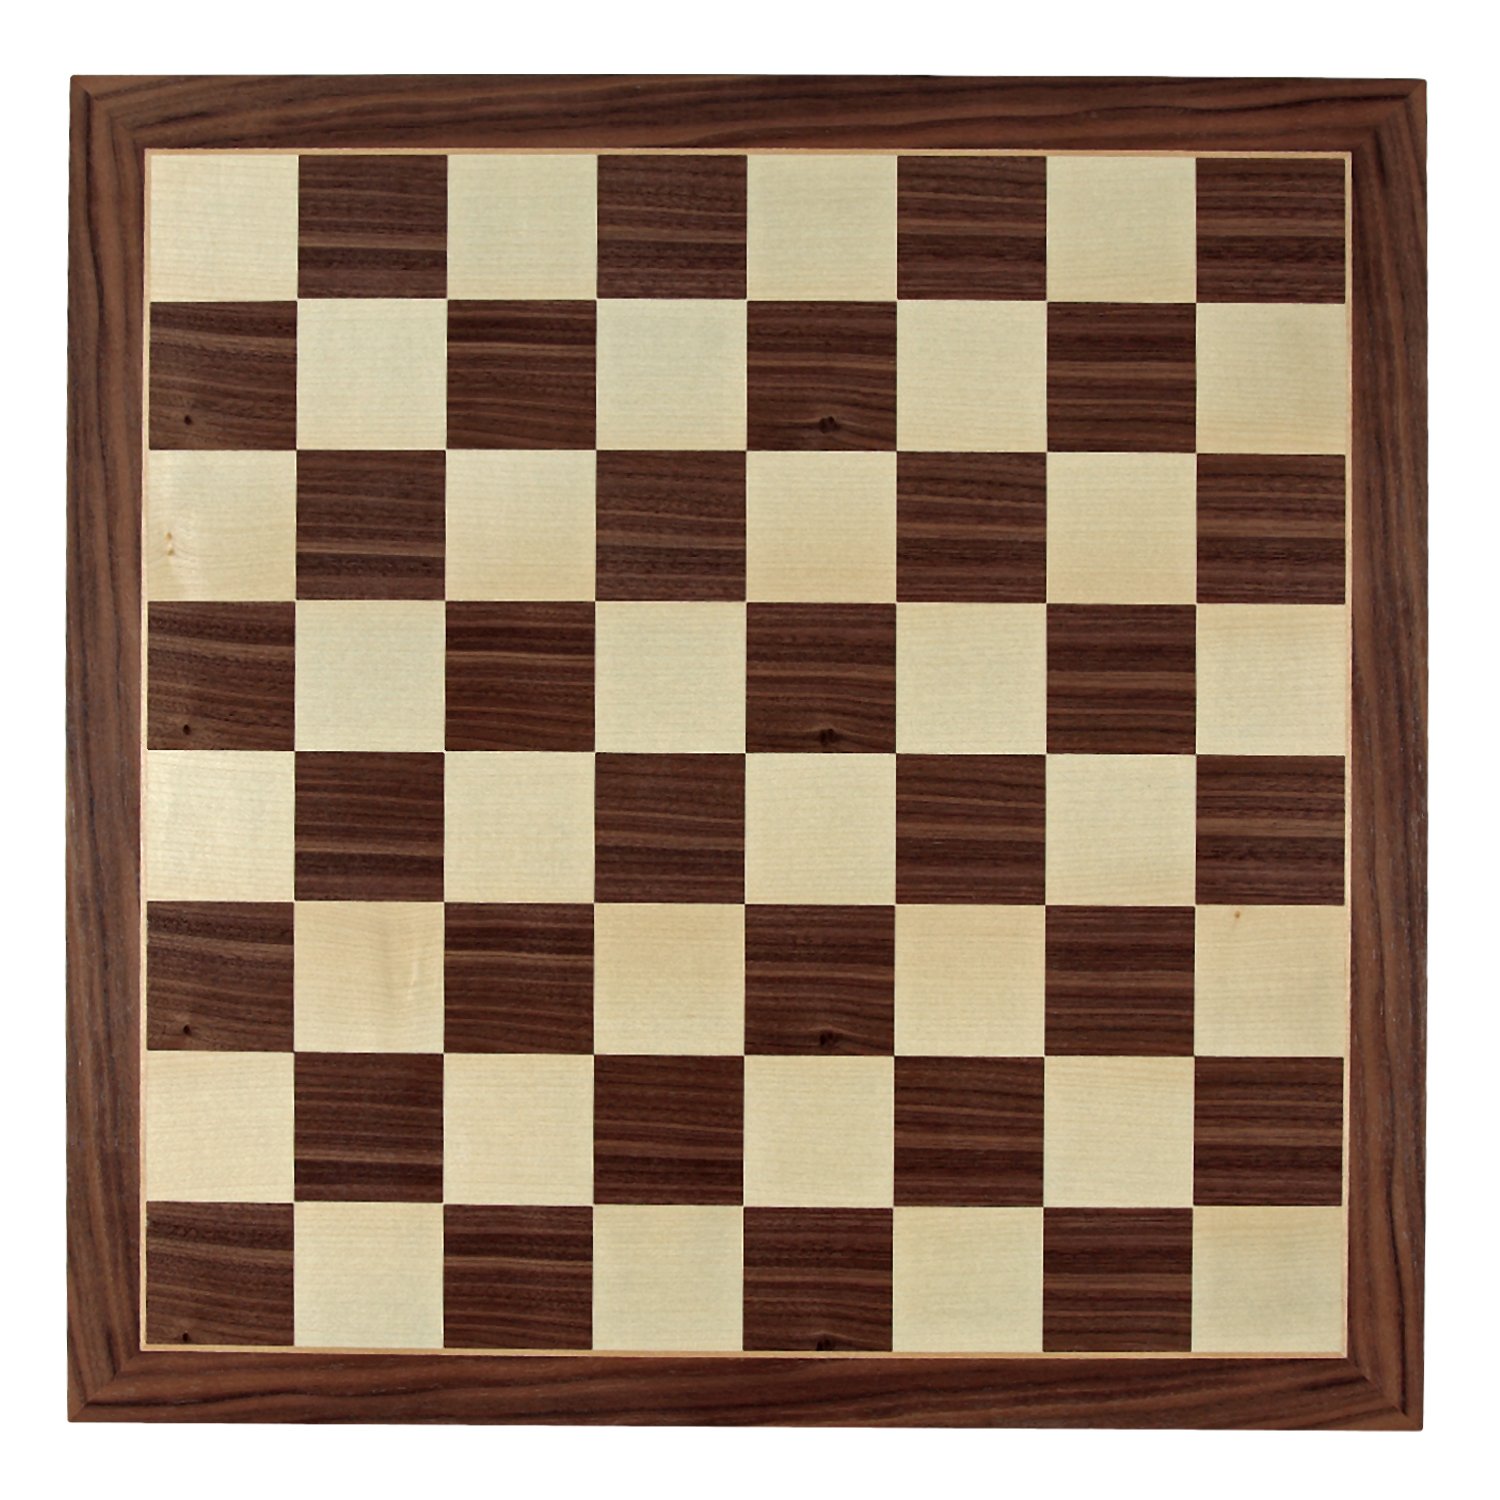 tablero clasico de ajedrez